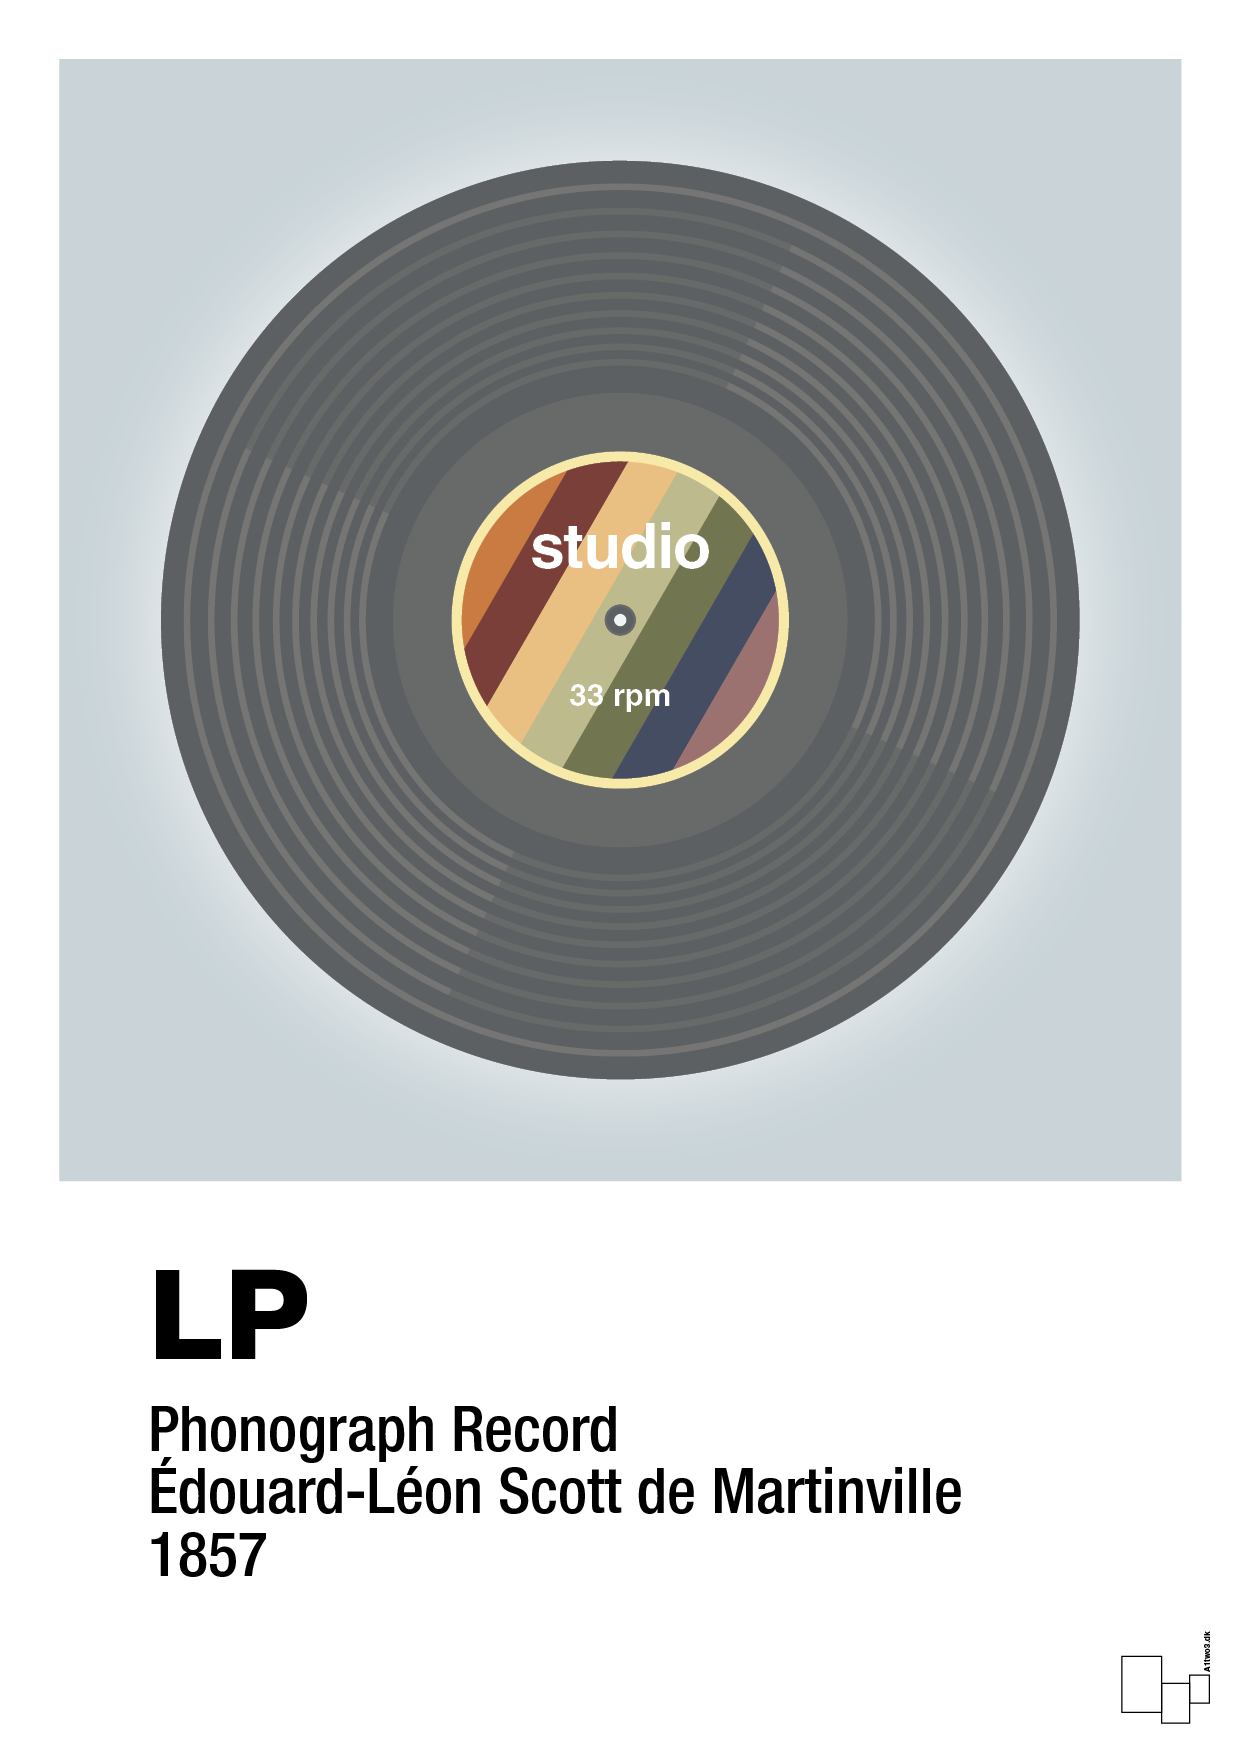 vinylplade 33rpm - Plakat med Grafik i Light Drizzle